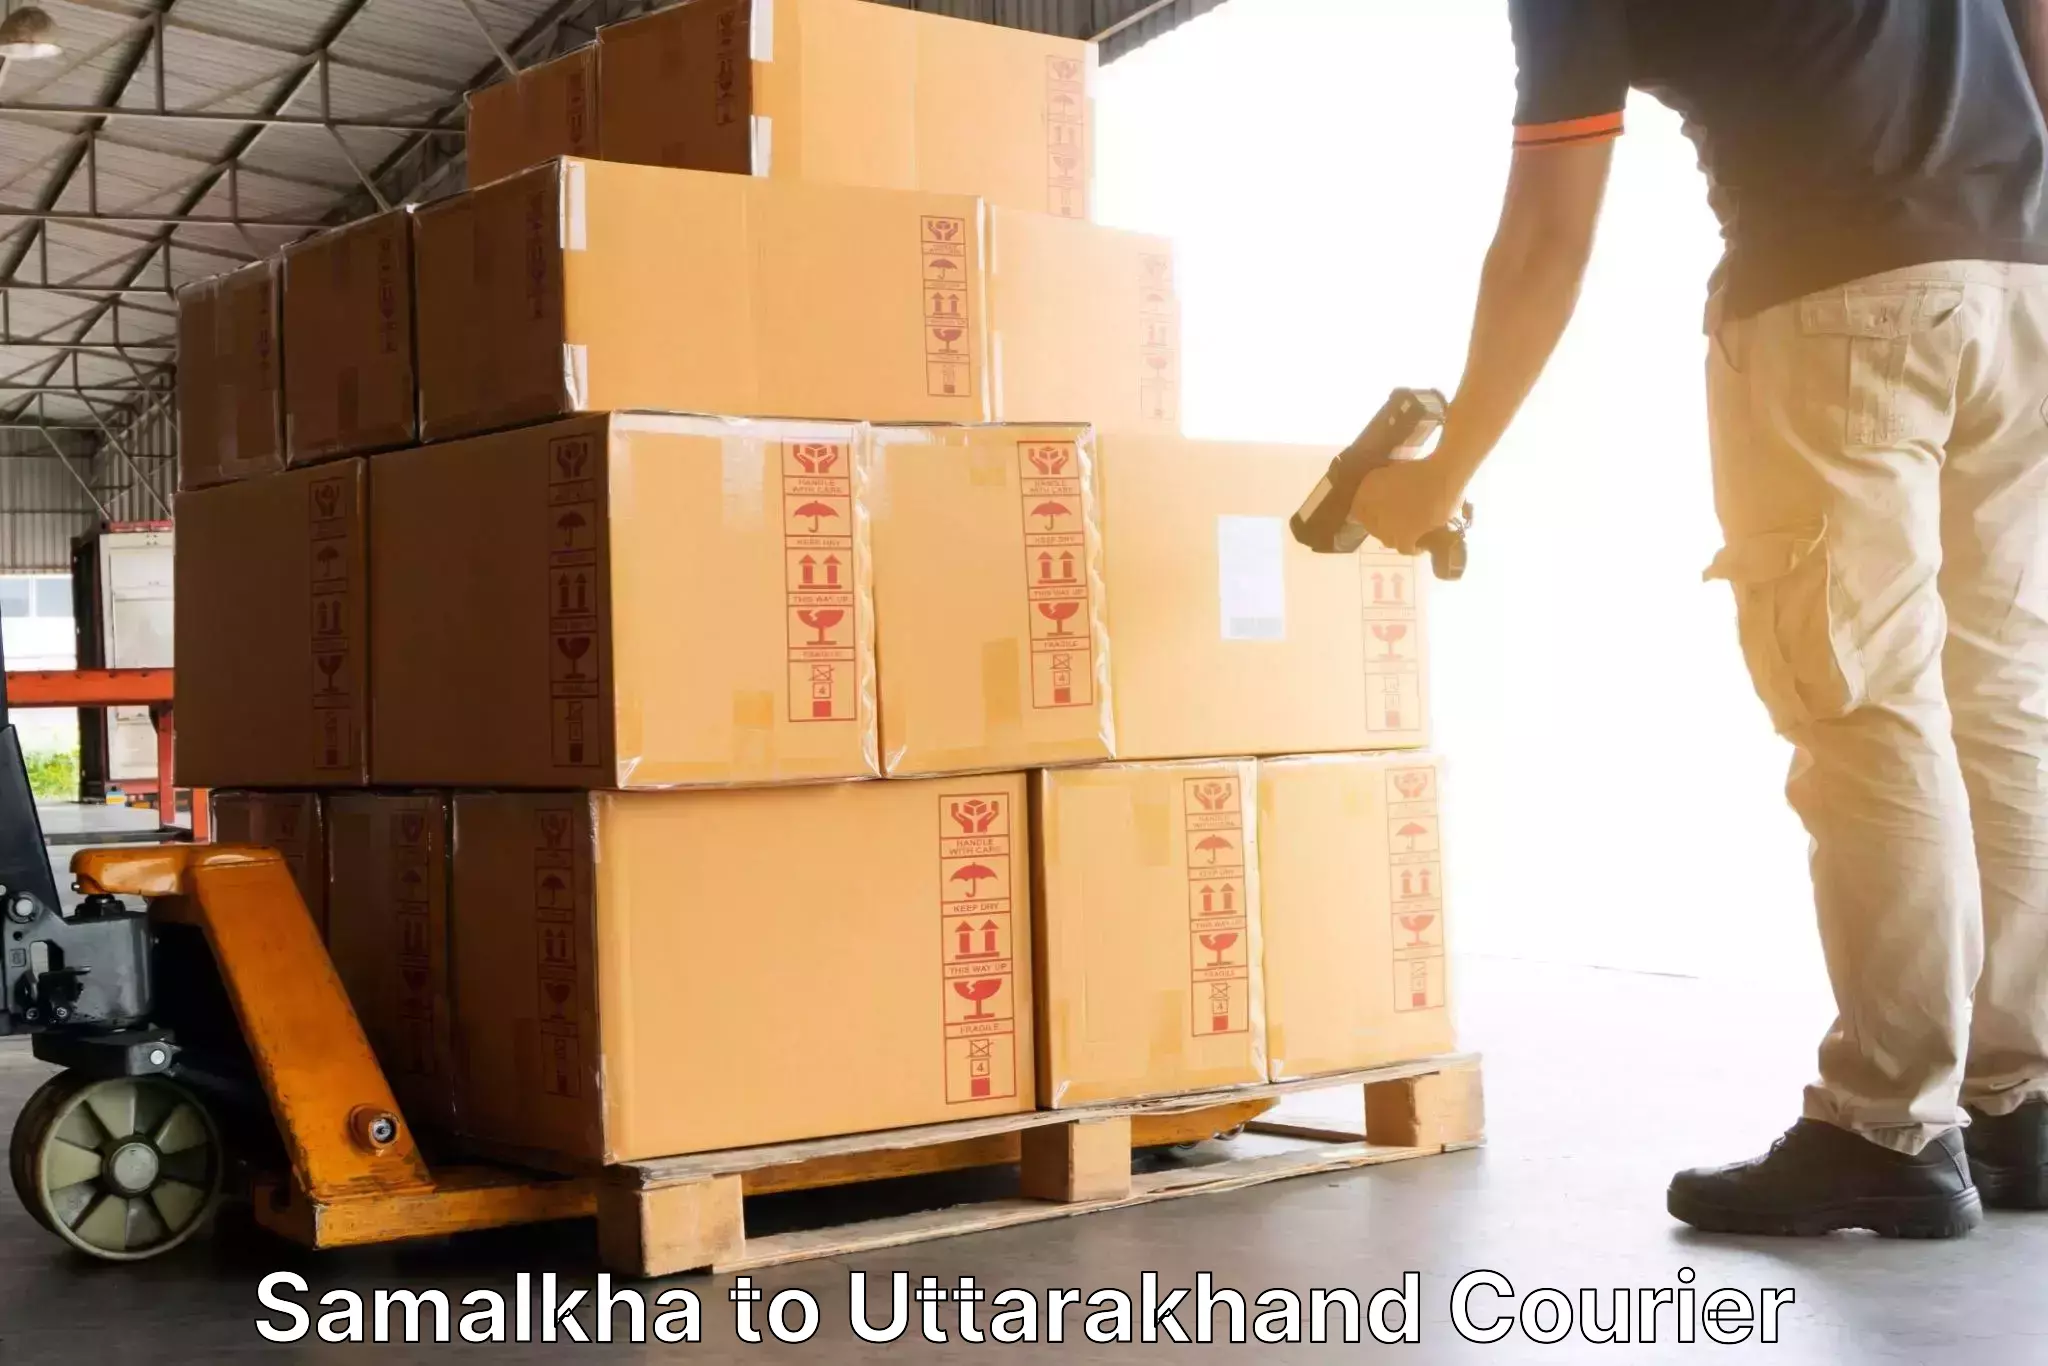 Express shipping in Samalkha to Rishikesh